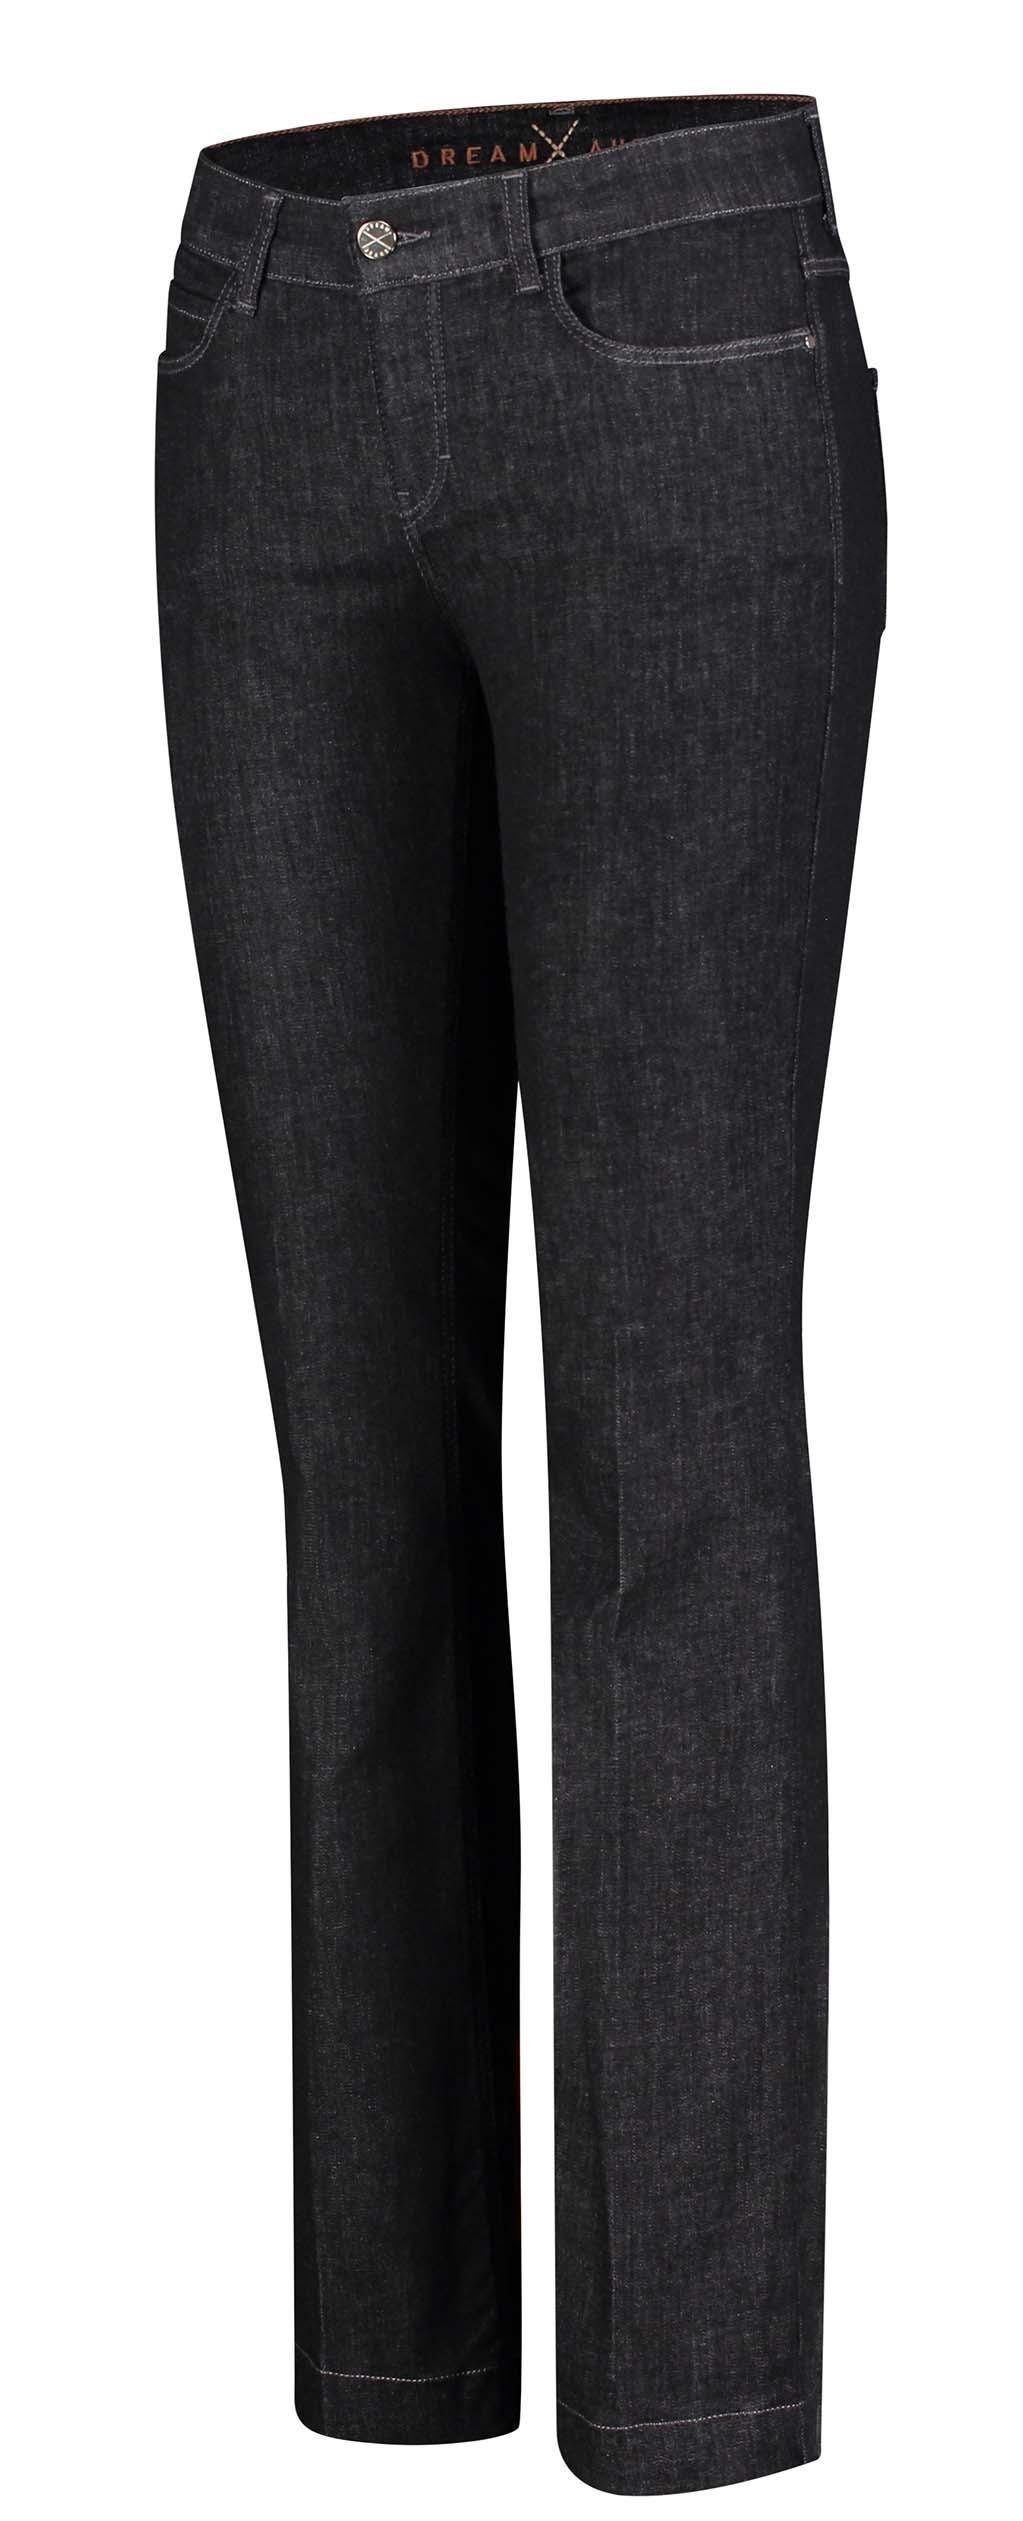 D944 black BOOT rinsed Stretch-Jeans MAC fashion MAC DREAM 5429-90-0357